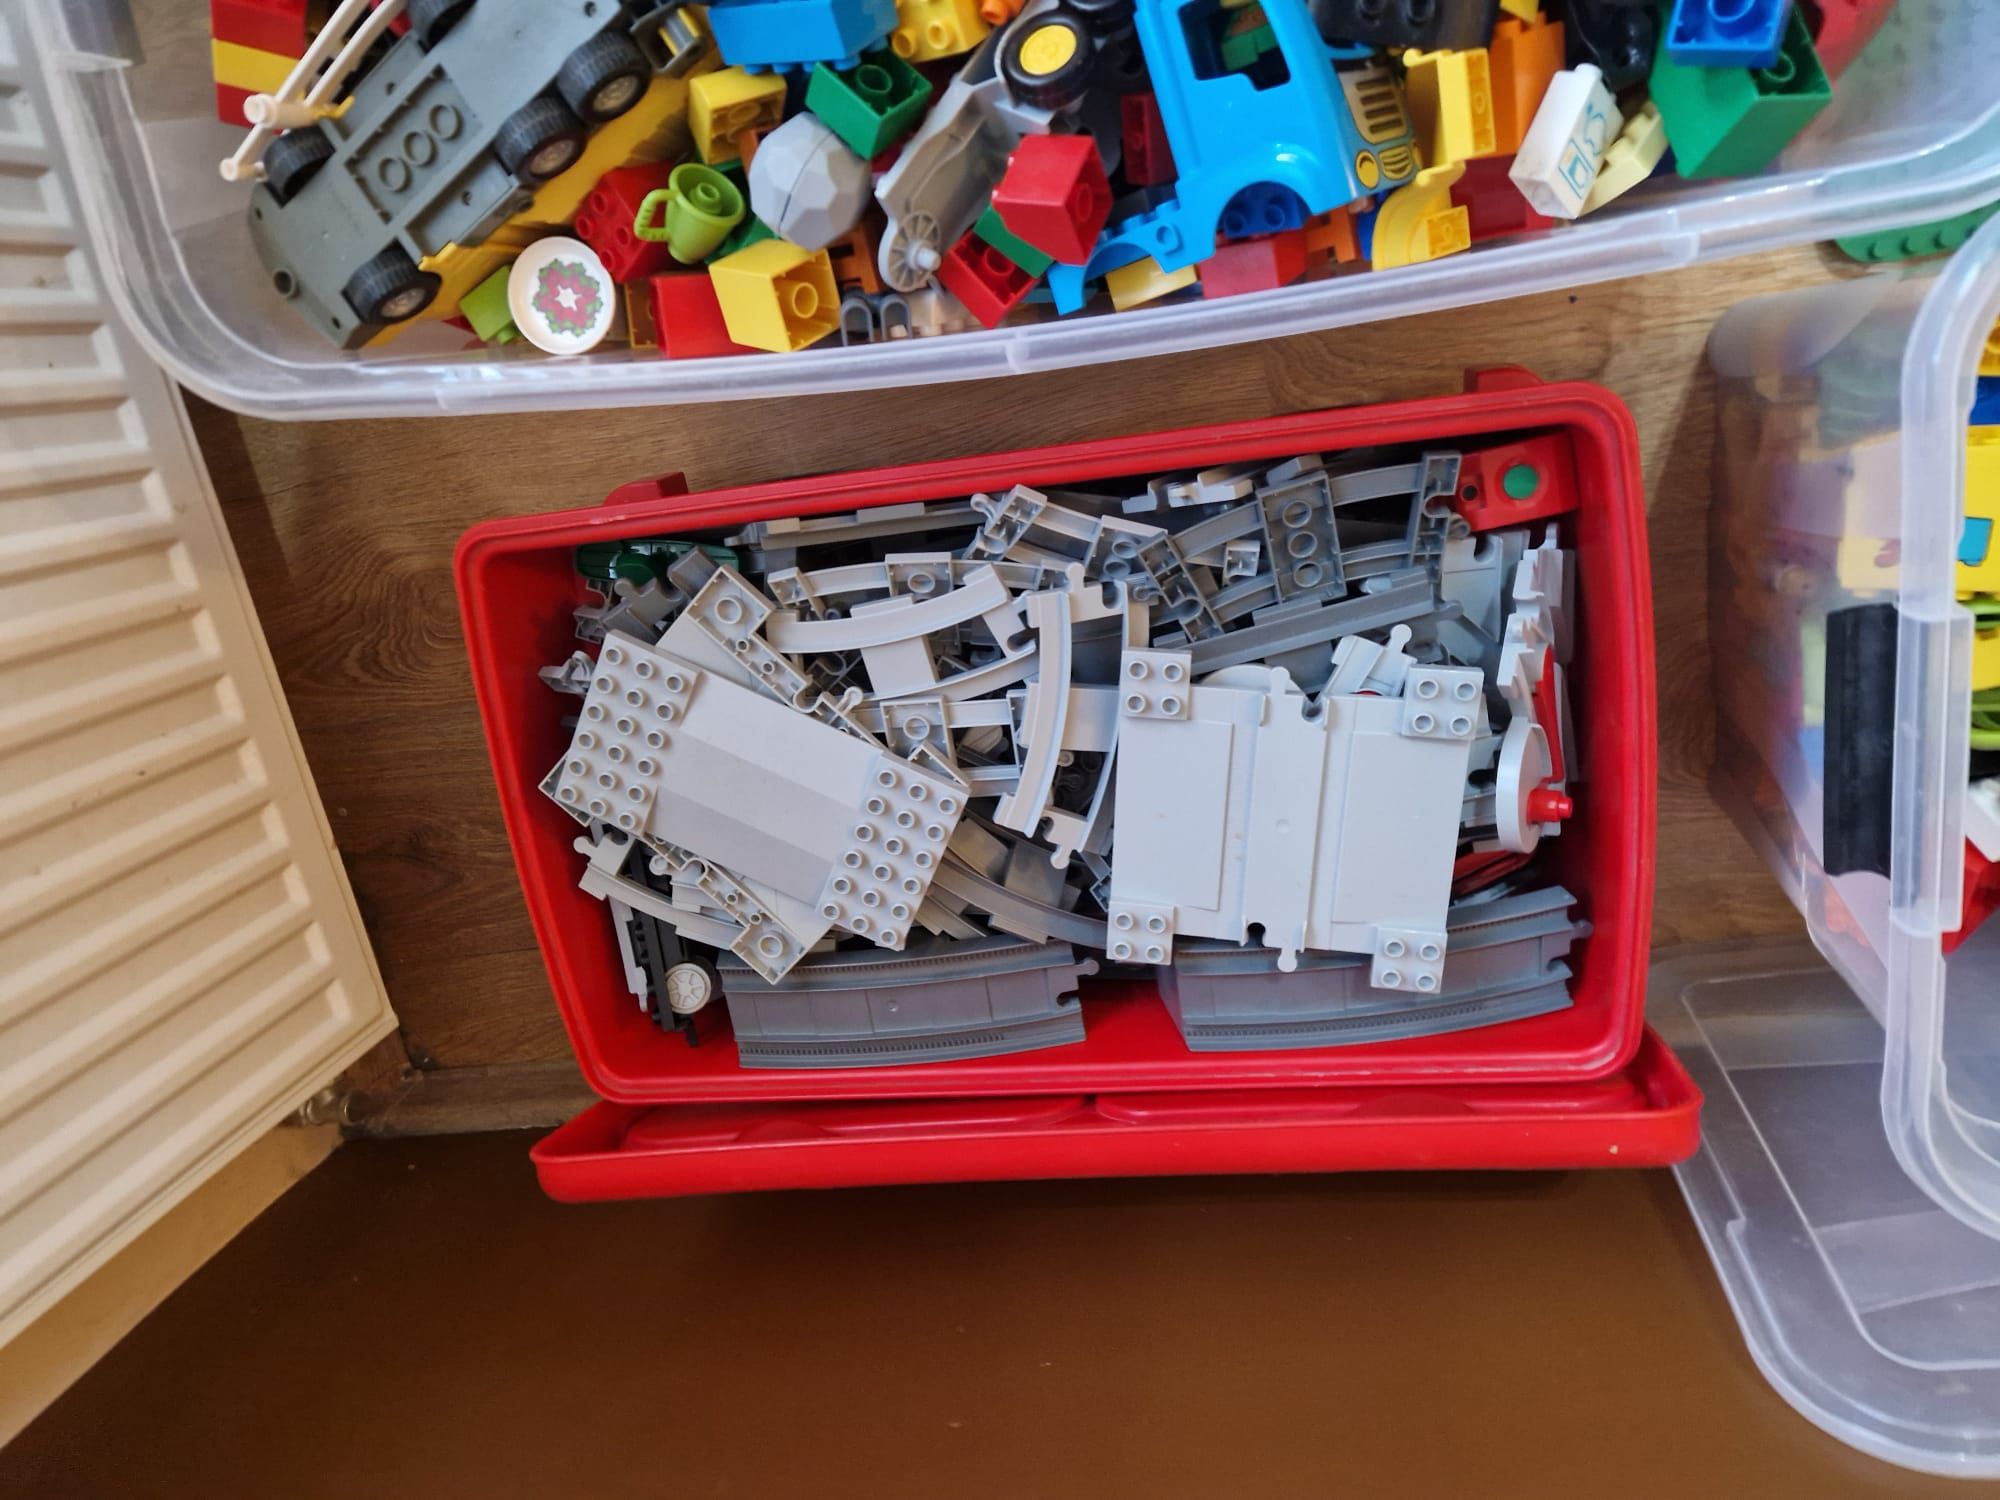 Lego DUPLO MIX tory